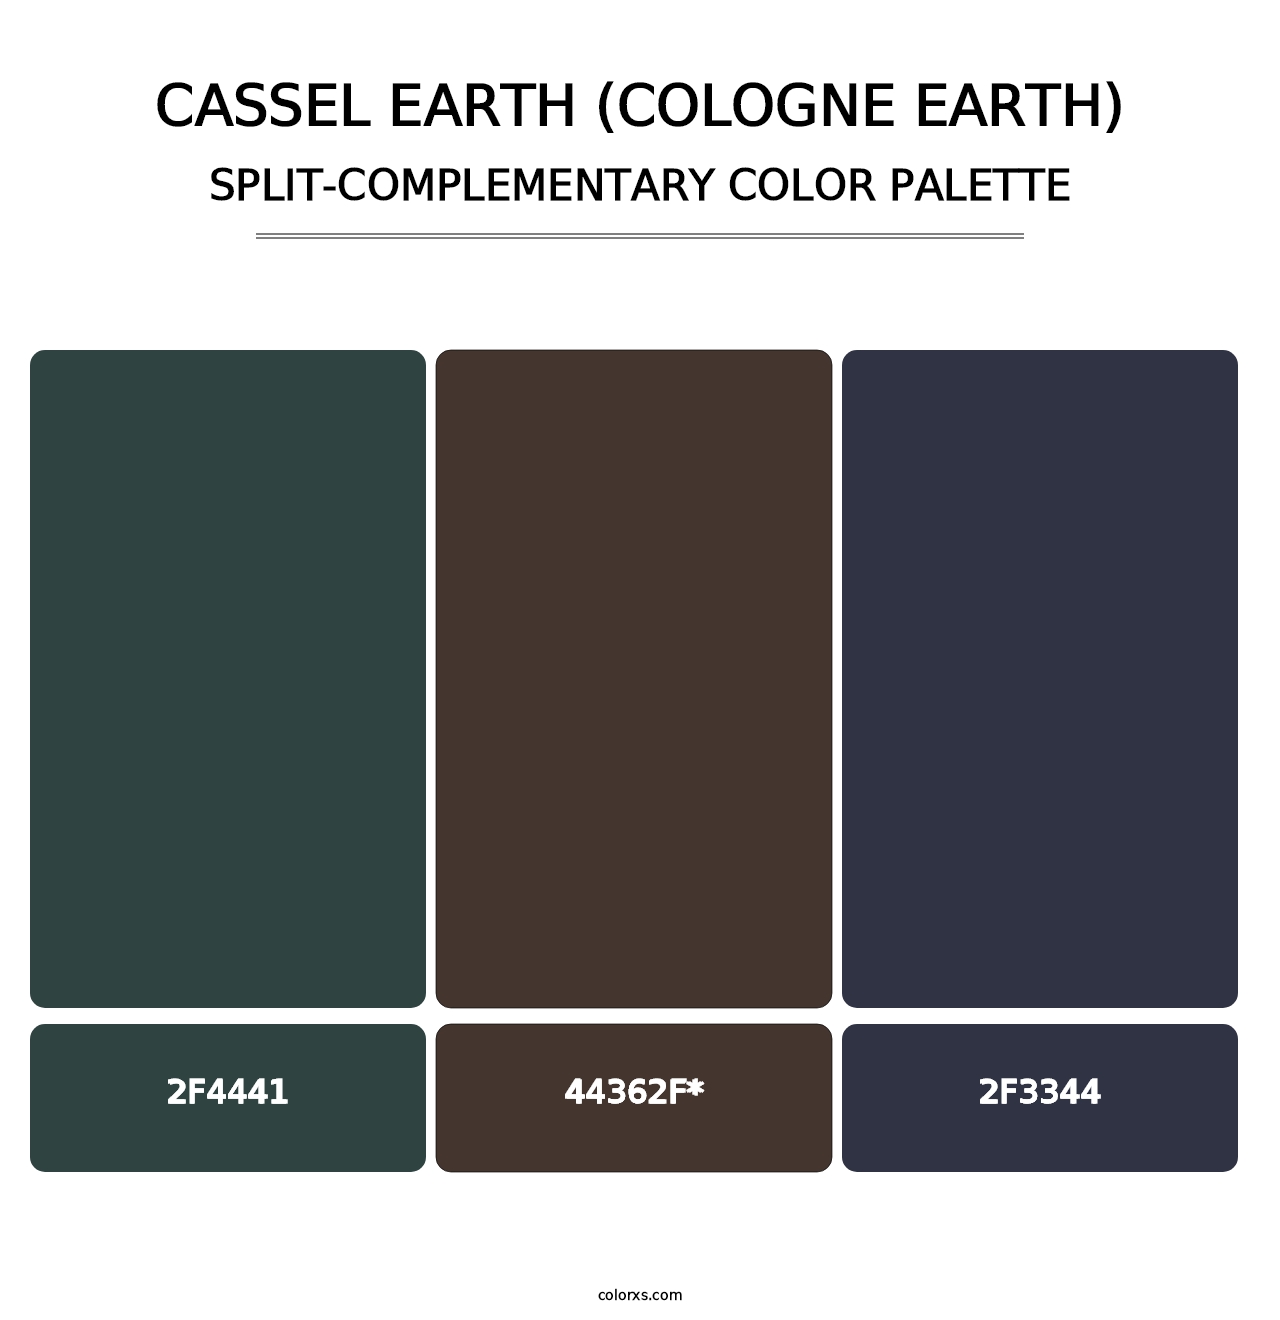 Cassel Earth (Cologne Earth) - Split-Complementary Color Palette